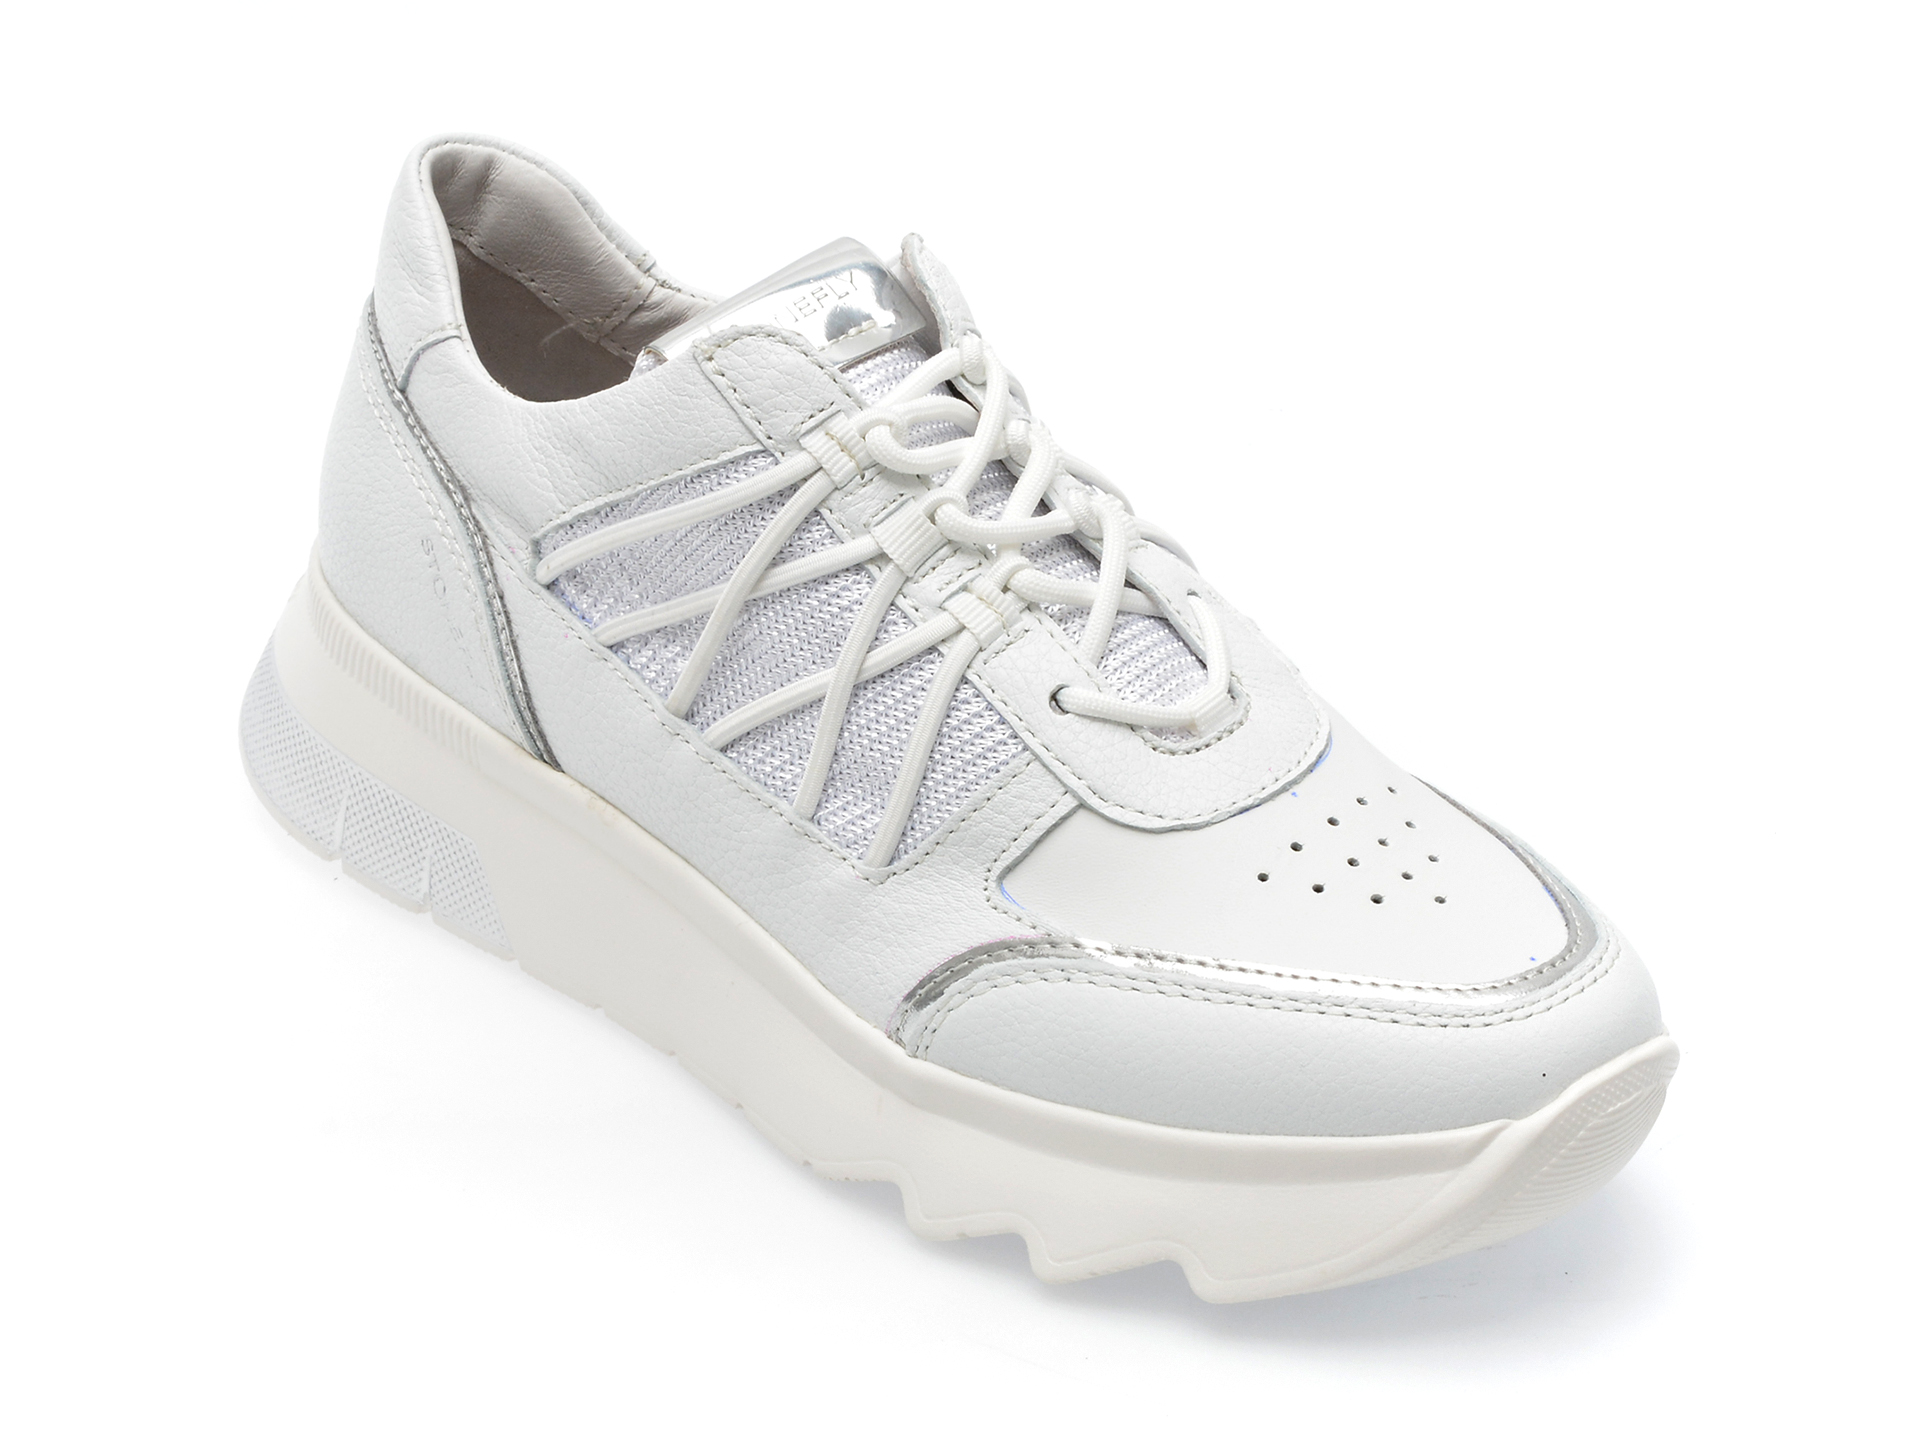 Pantofi STONEFLY albi, SPOCK34, din piele naturala